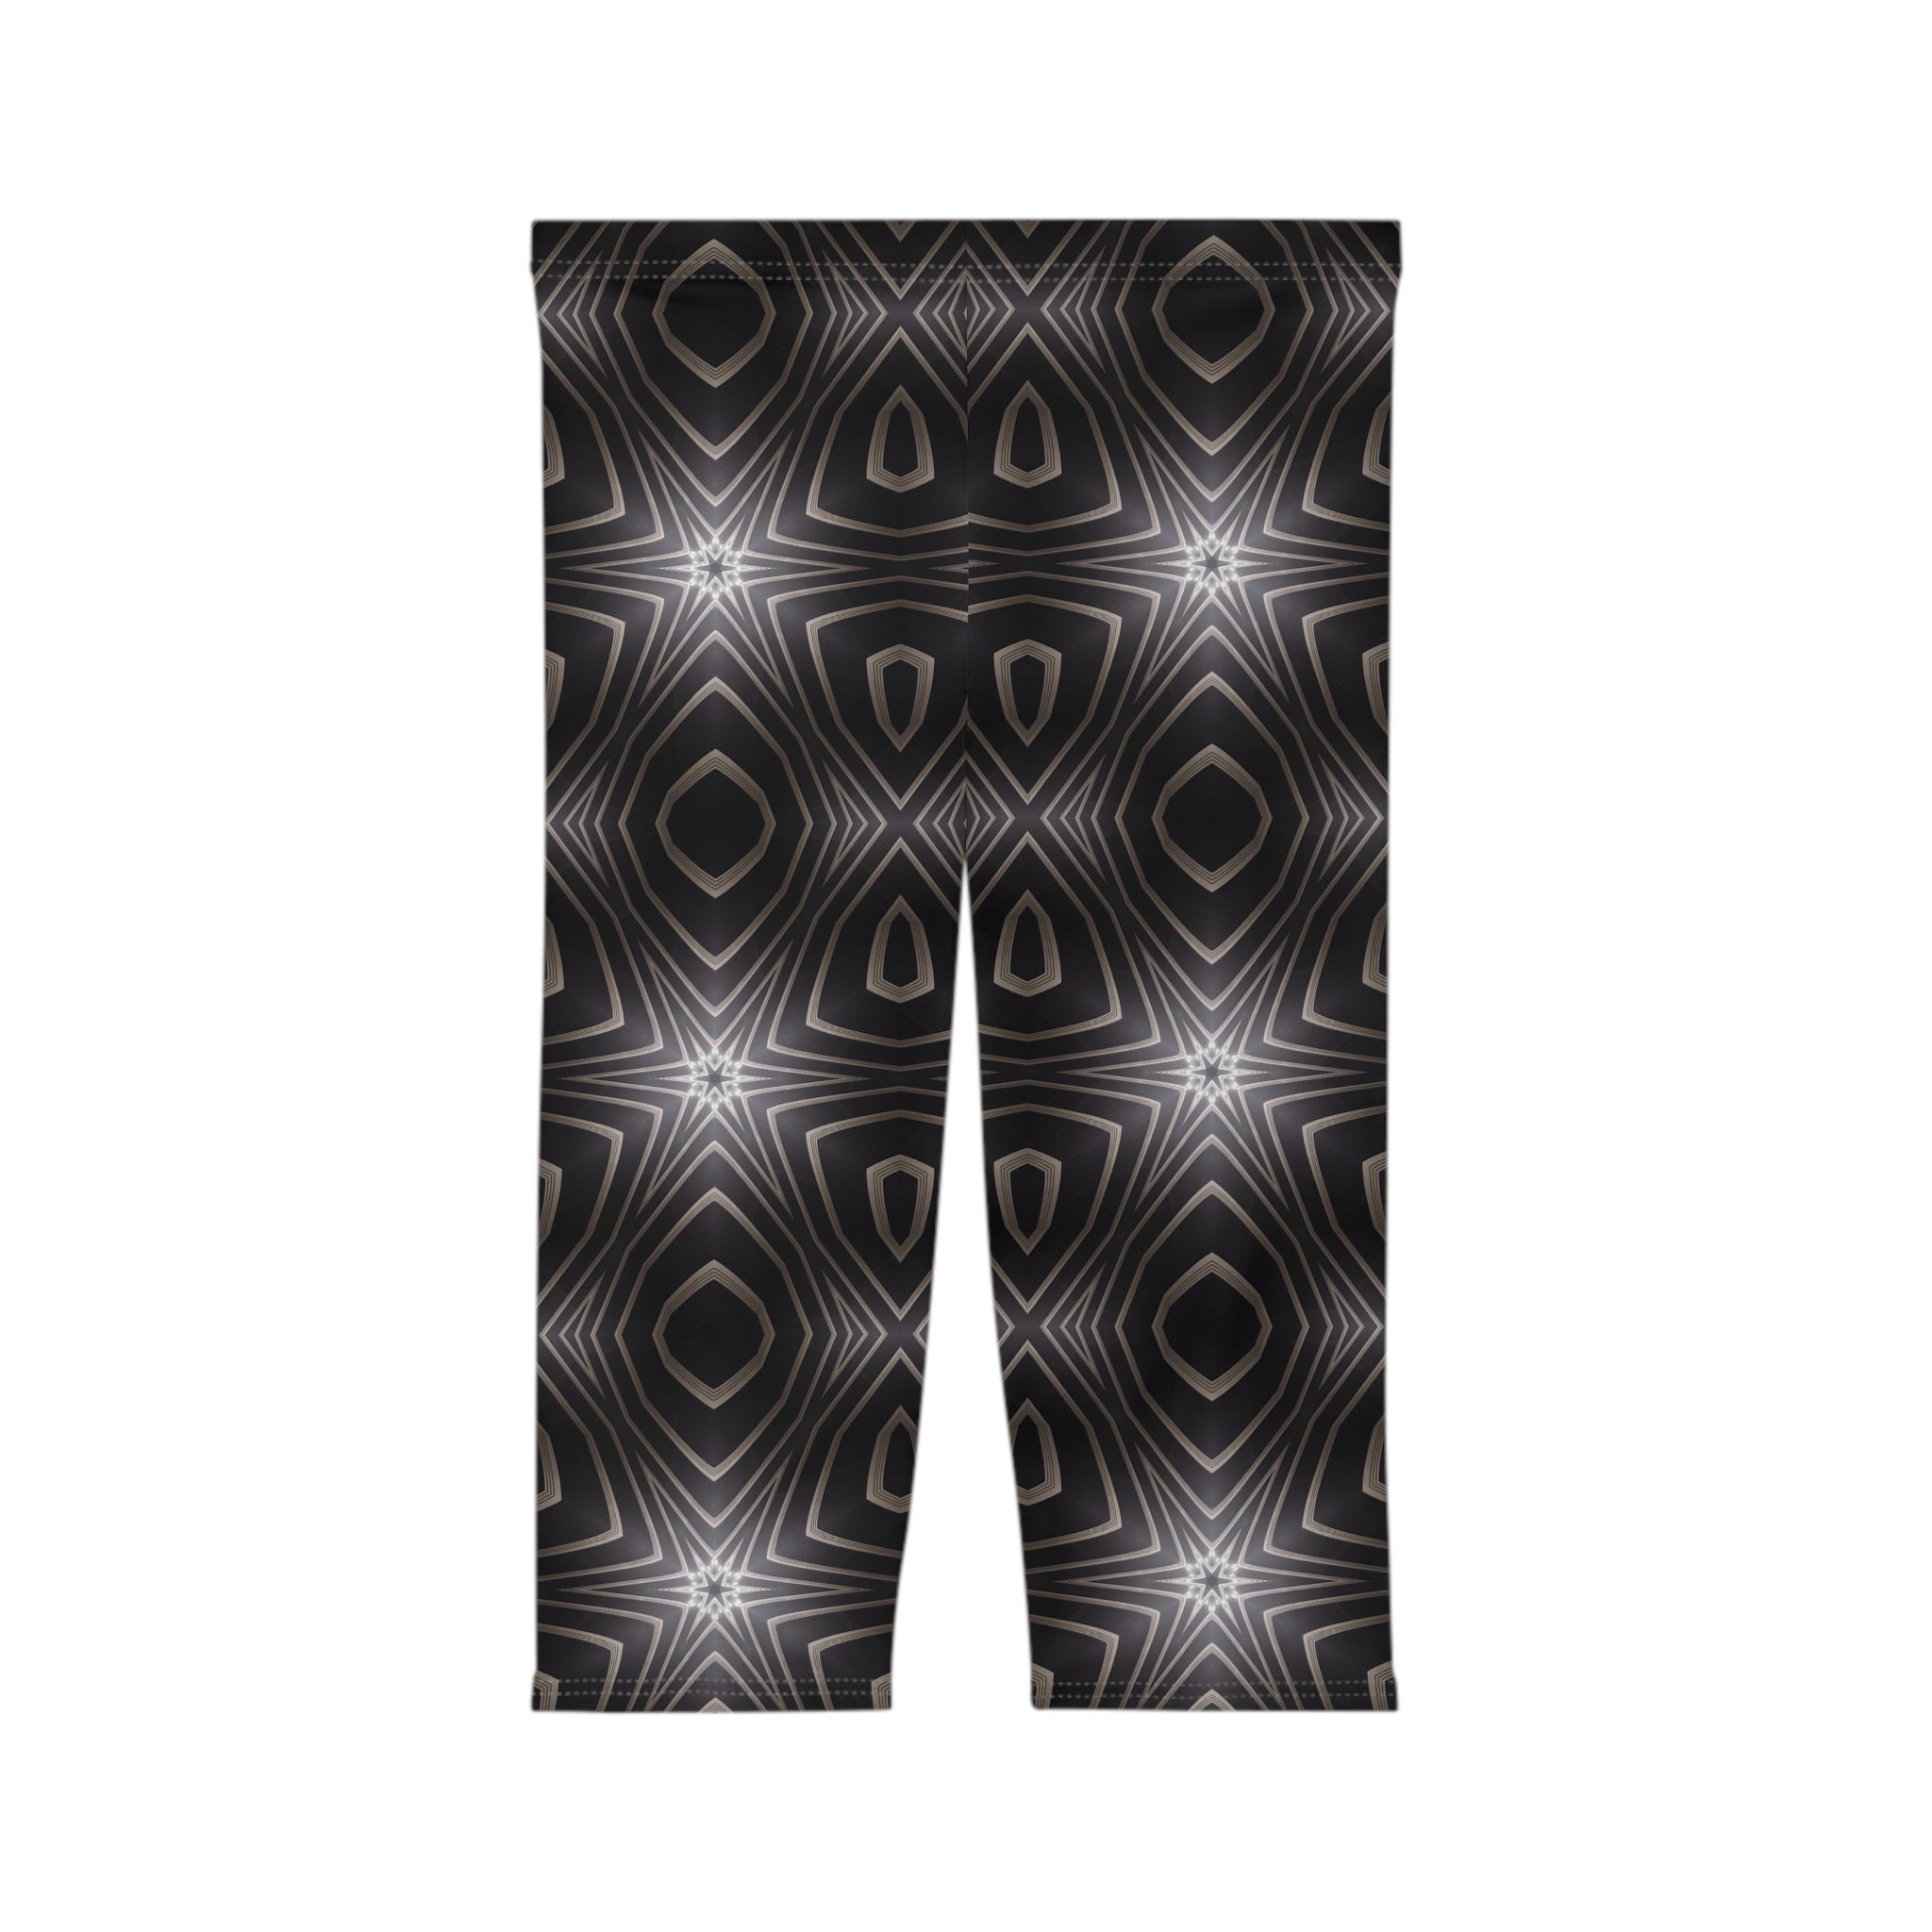 Star Design Black and White Capri Leggings up to 2XL - Shell Design Boutique